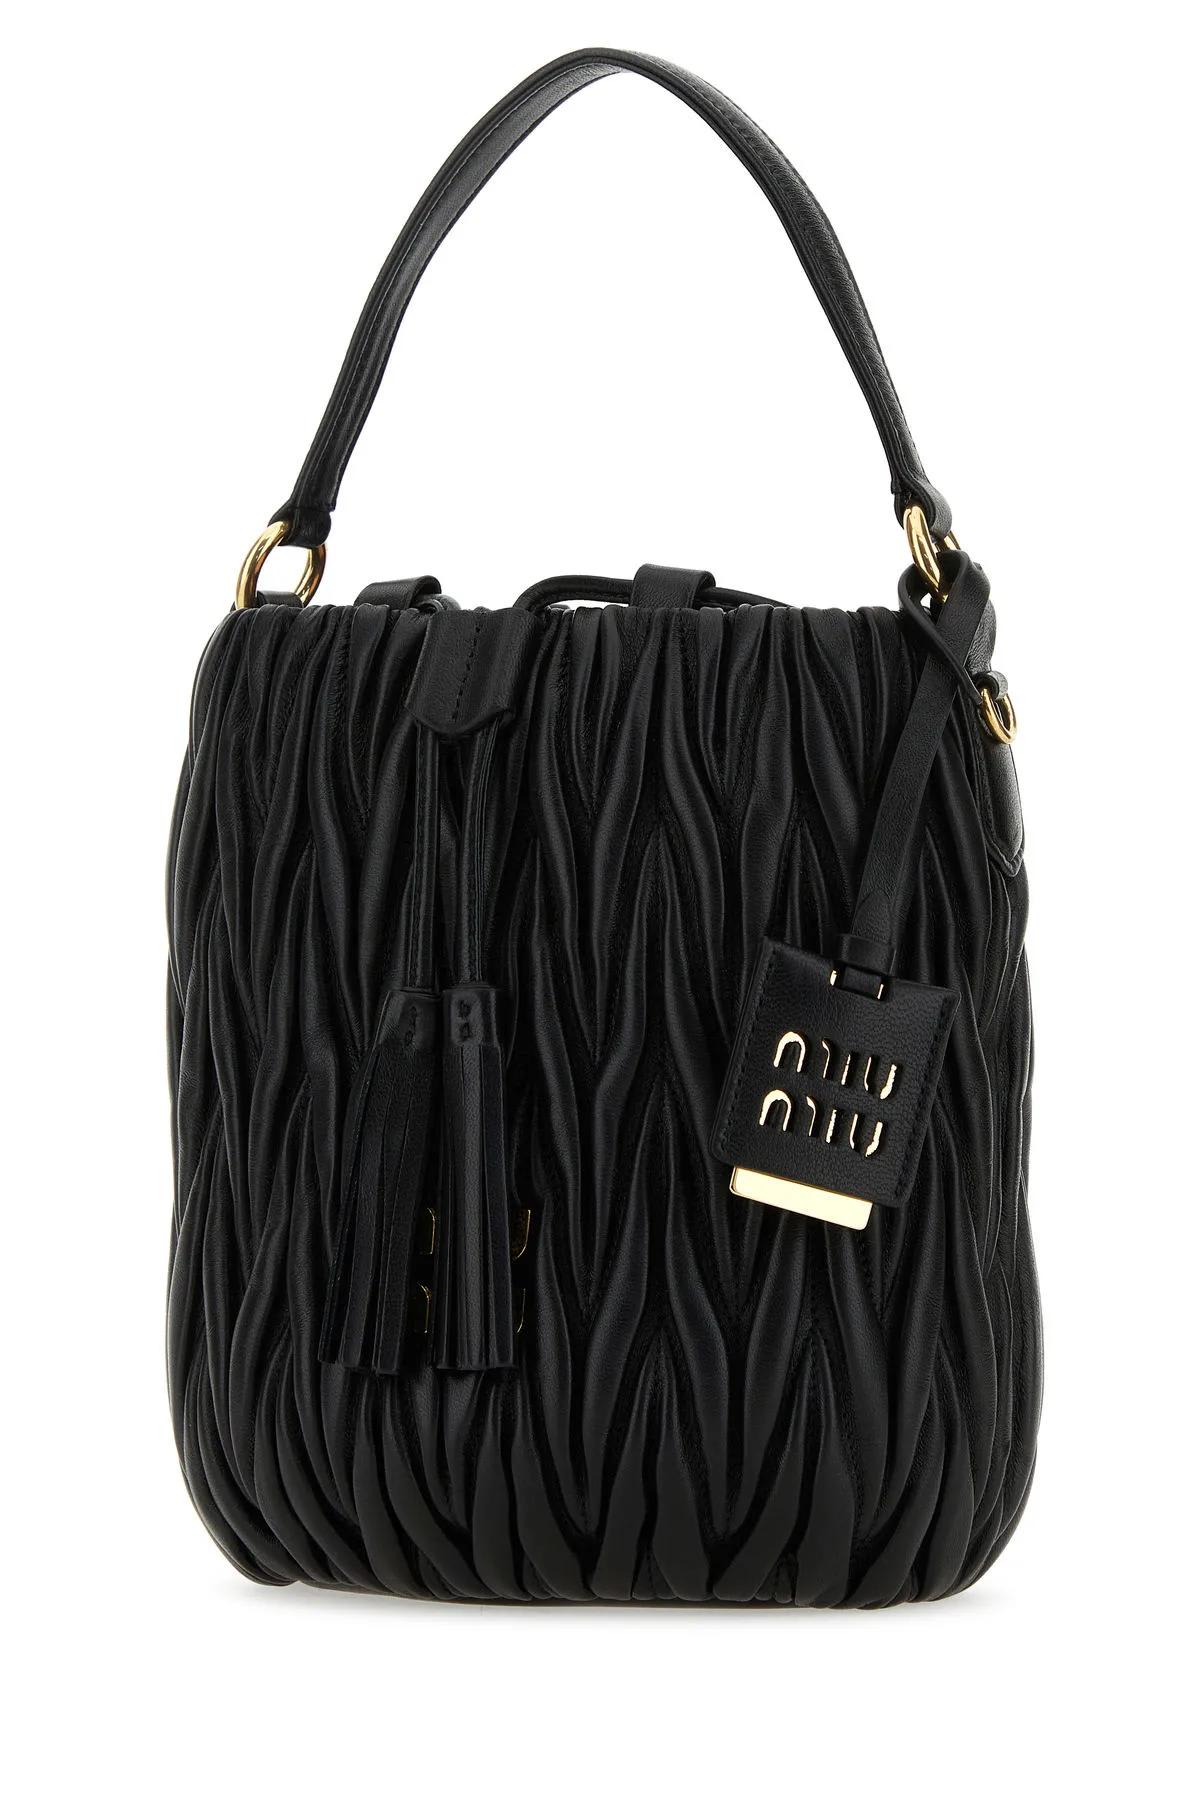 Shop Miu Miu Black Nappa Leather Handbag